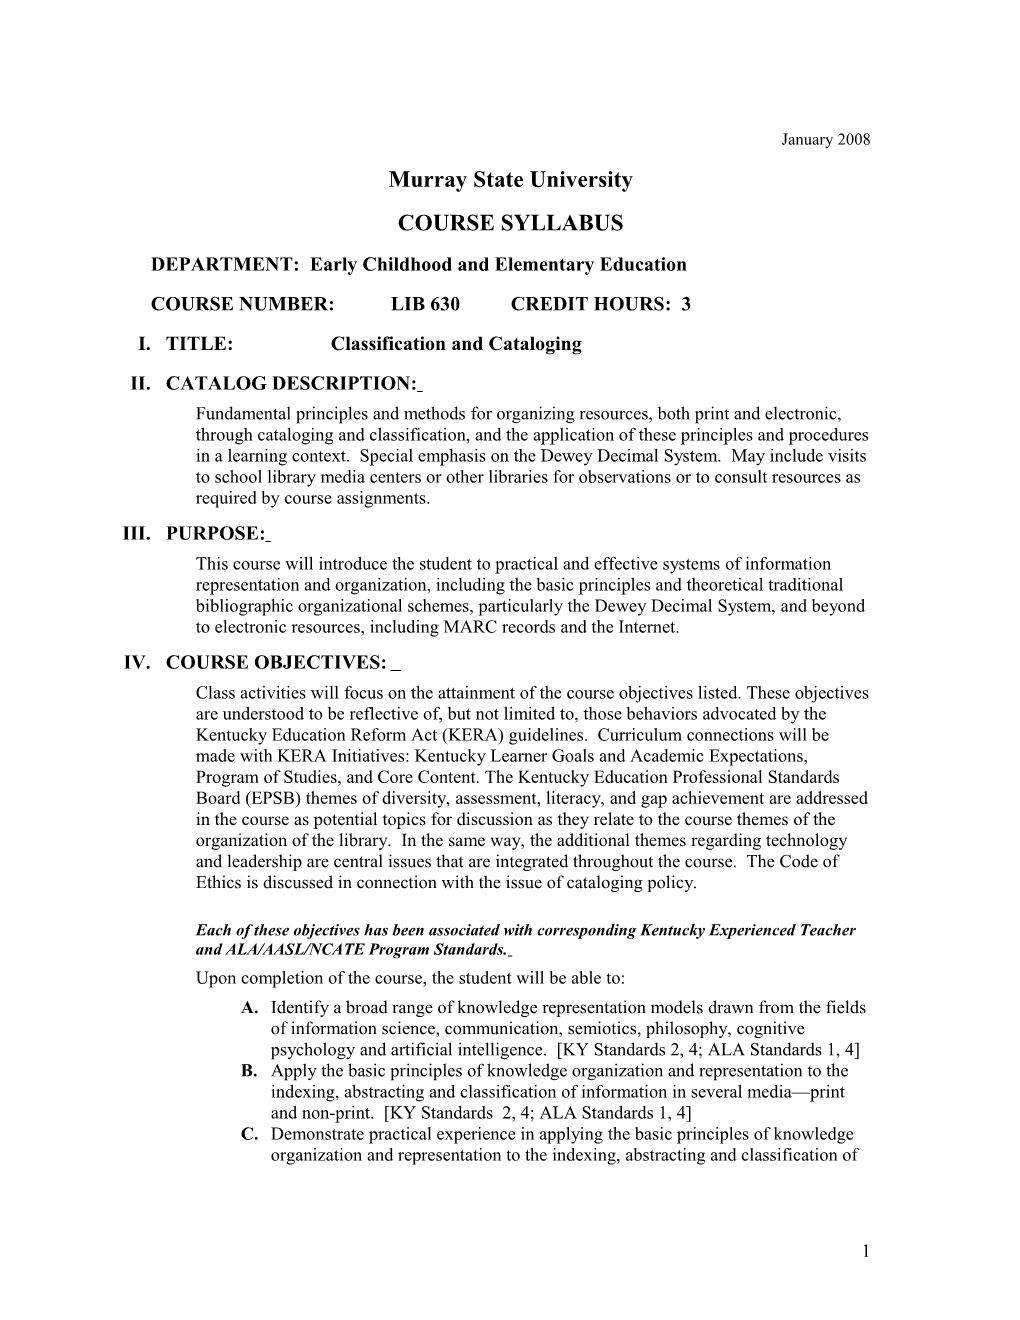 LIB 630 Classification and Cataloging Syllabus